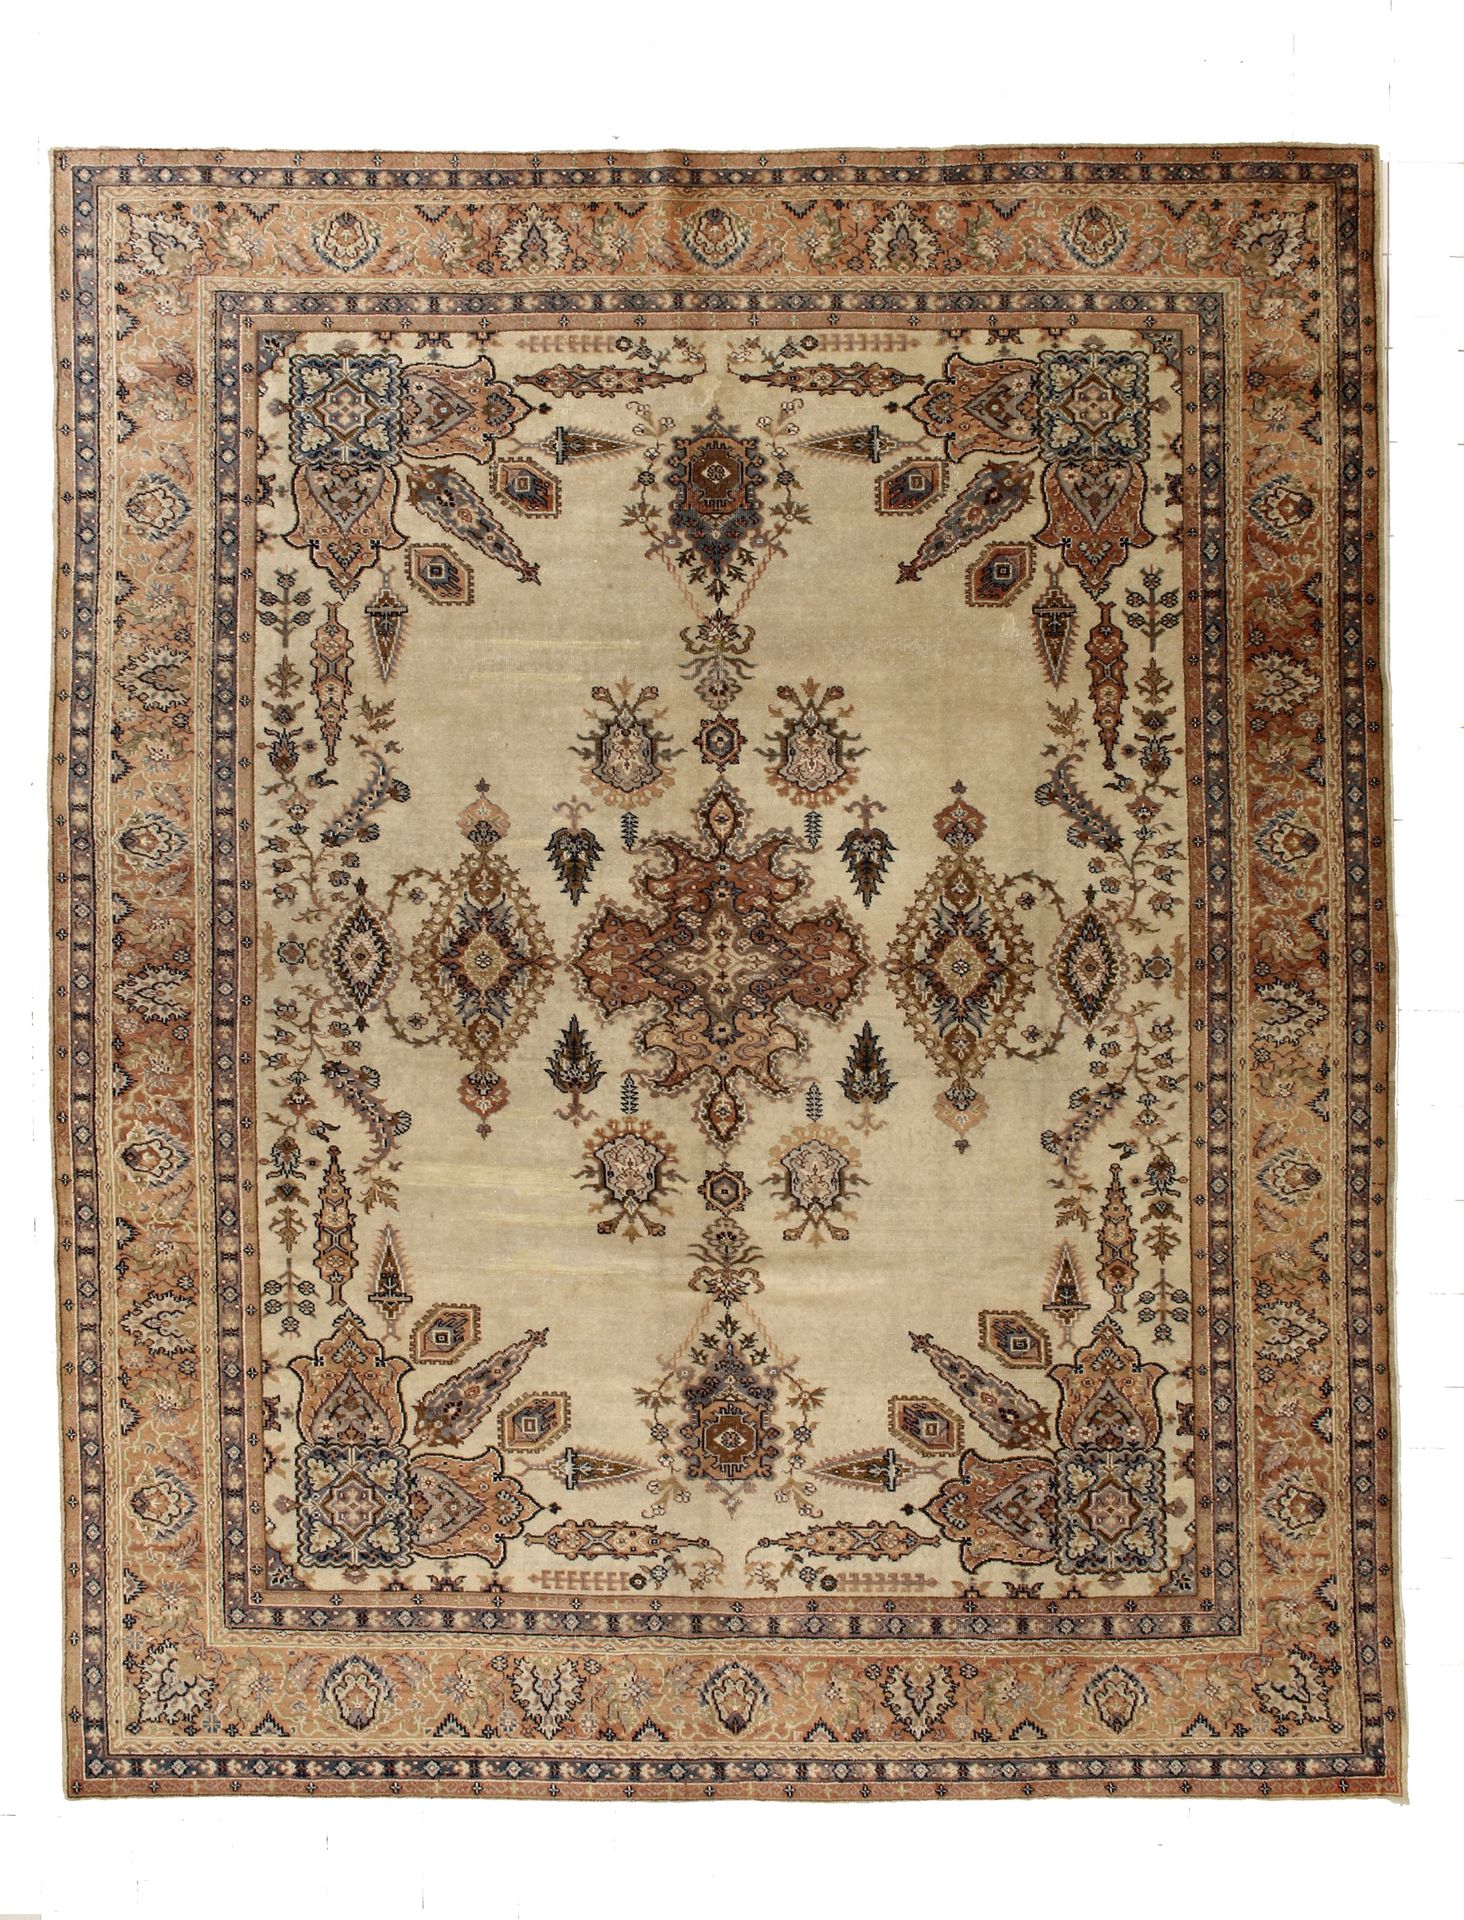 Bor carpet Bor. Teppich. Anatolien. Anfang des 20. Jahrhunderts. Sehr guter Erha&hellip;